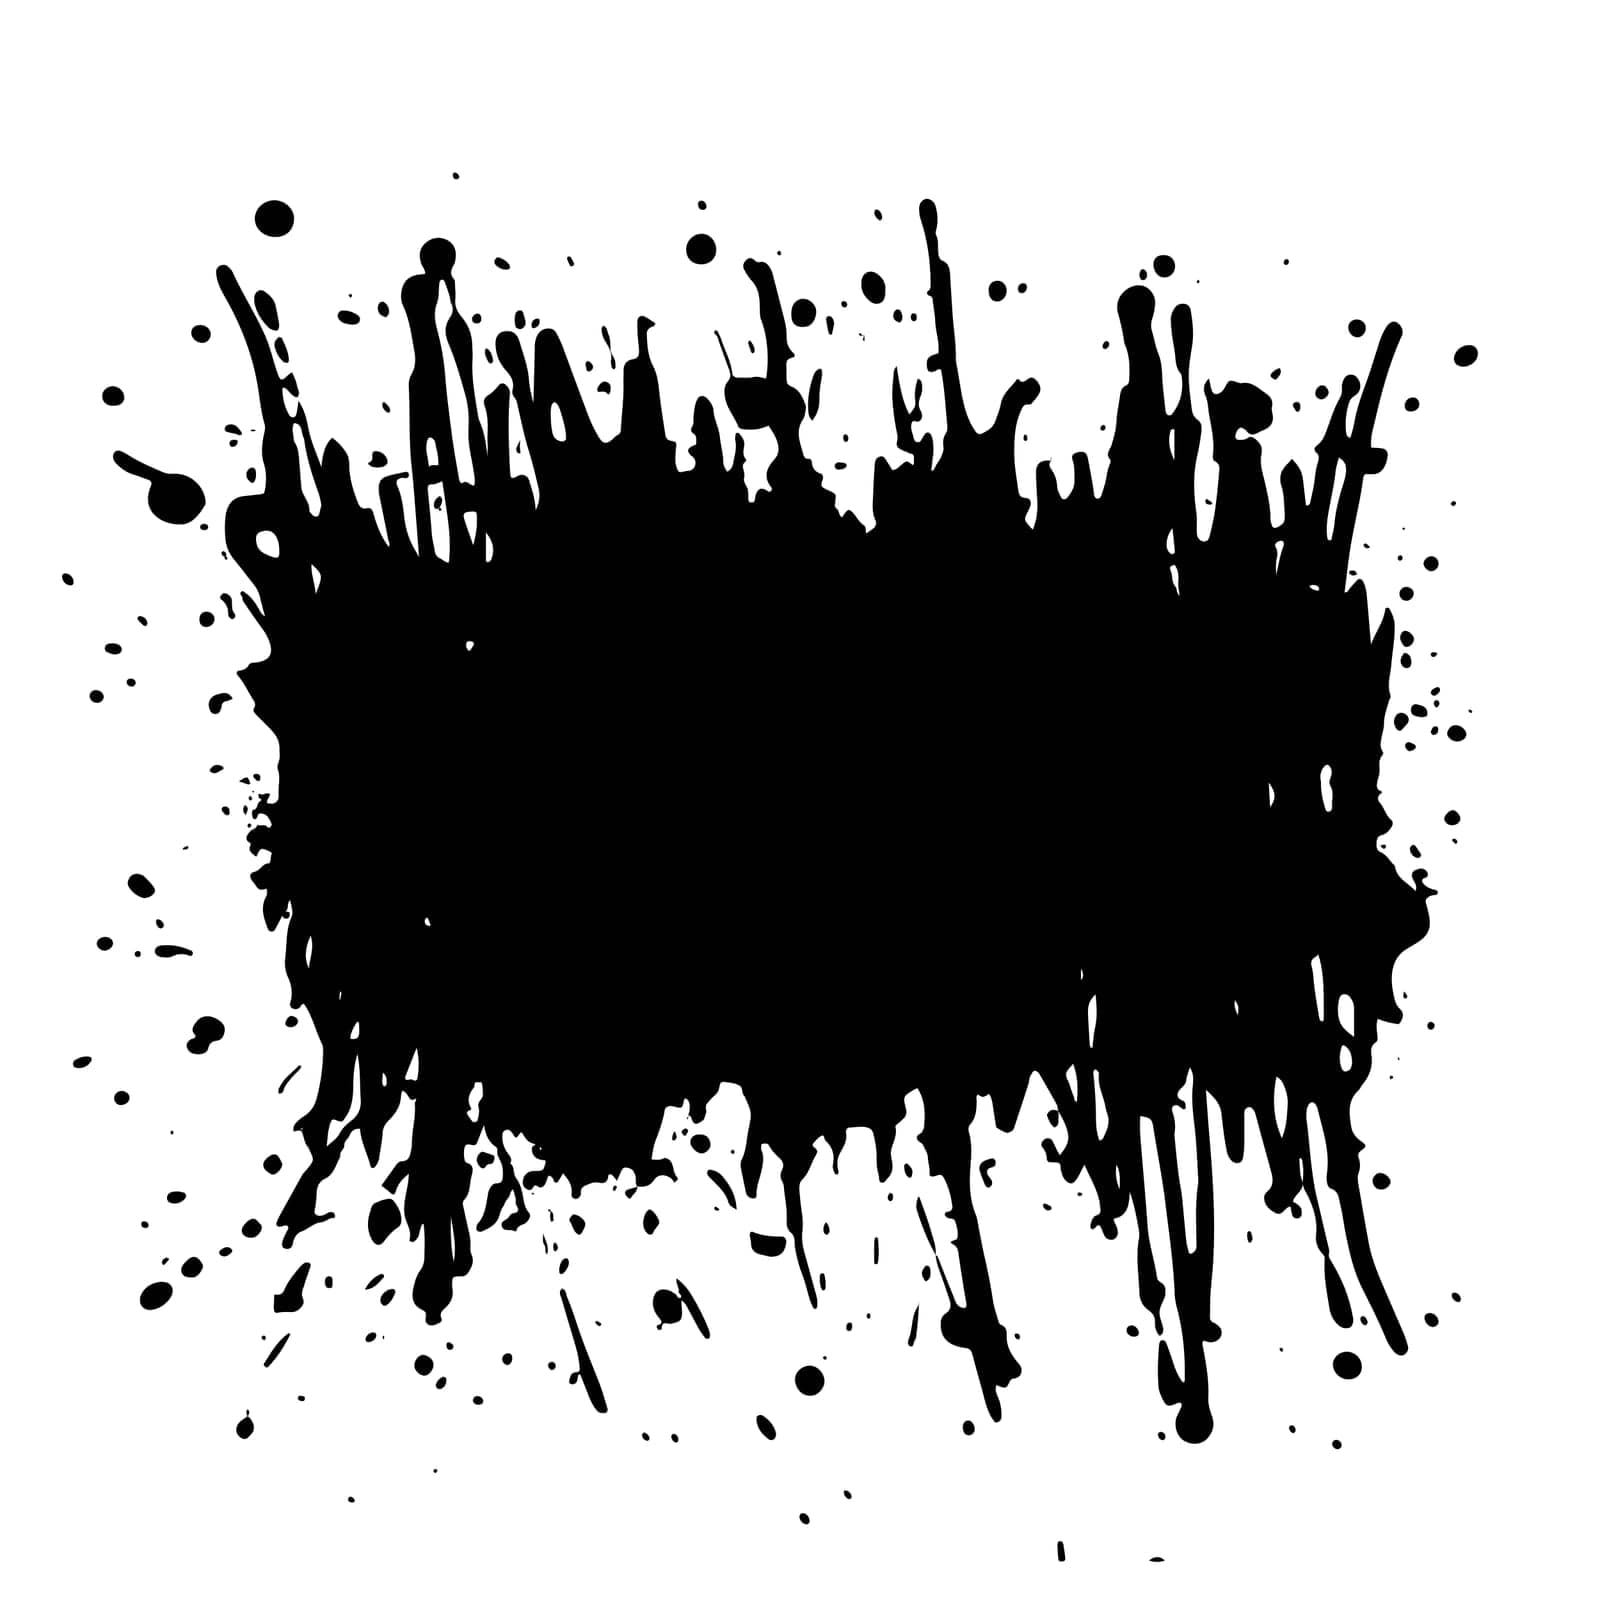 Grunge background. Abstract black grunge splashes. Vector illustration.